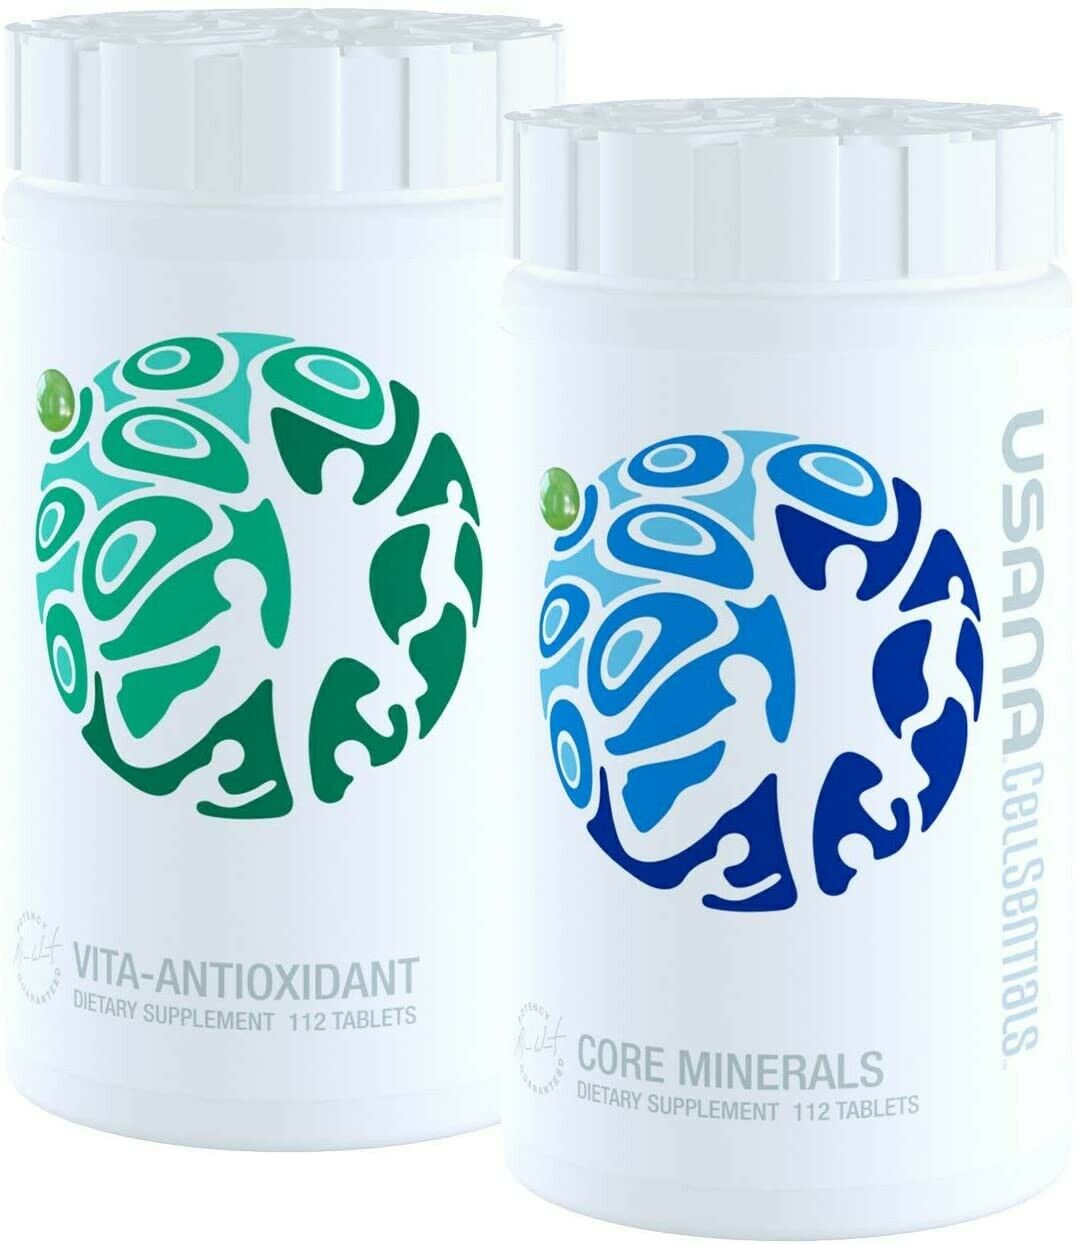 USANA CellSentials Core Minerals Vita-Vitaminas antioxidantes 112 tabletas c/u. NUEVO